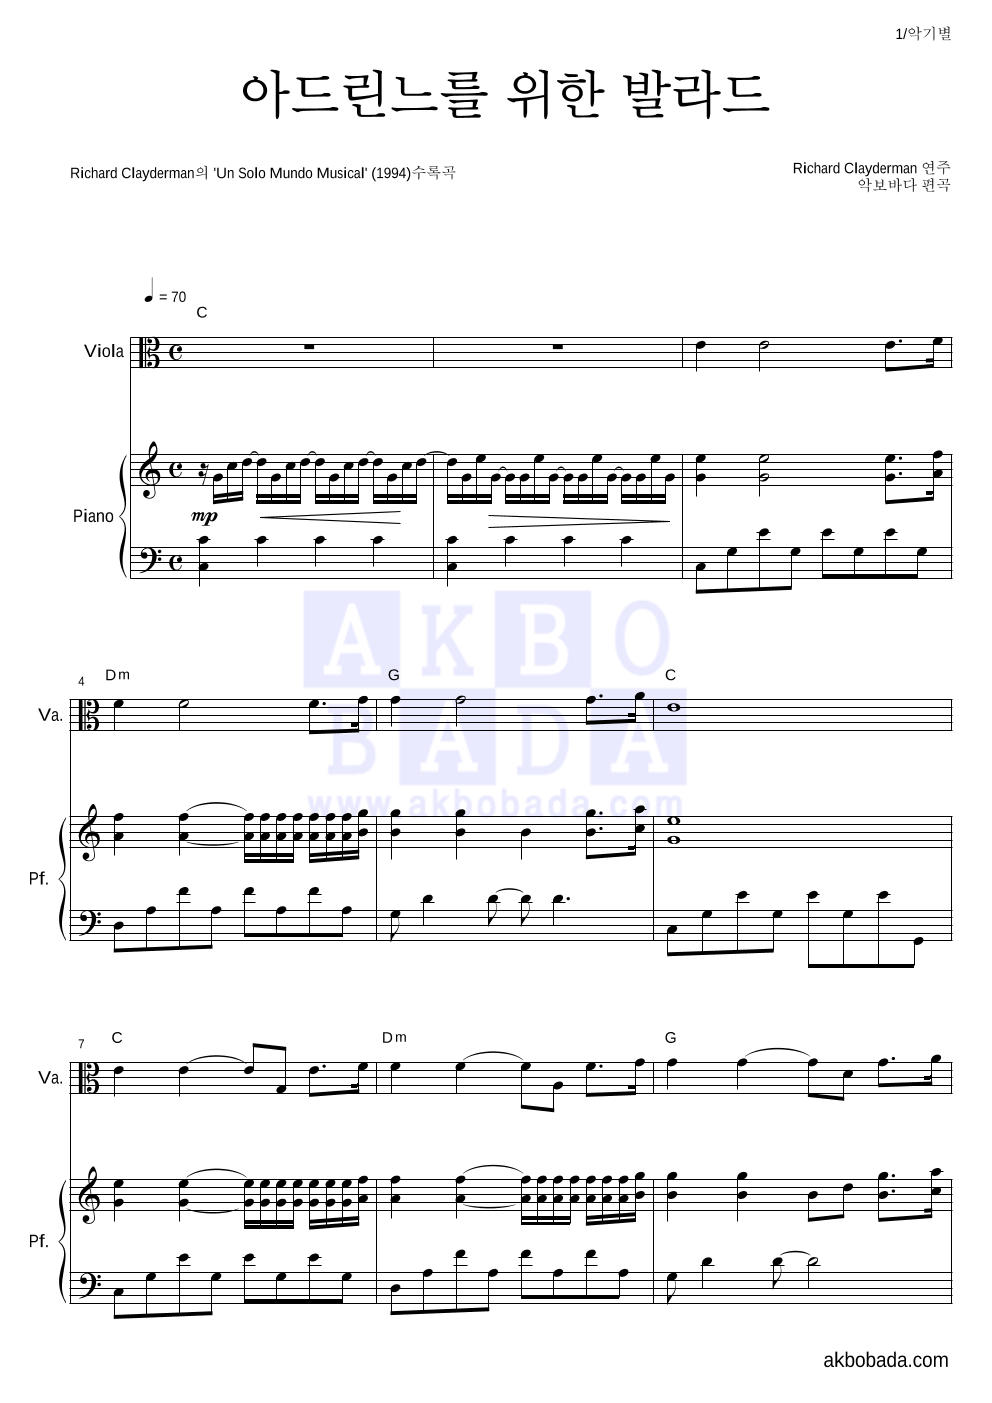 Richard Clayderman  - 아드린느를 위한 발라드 비올라&피아노 악보 